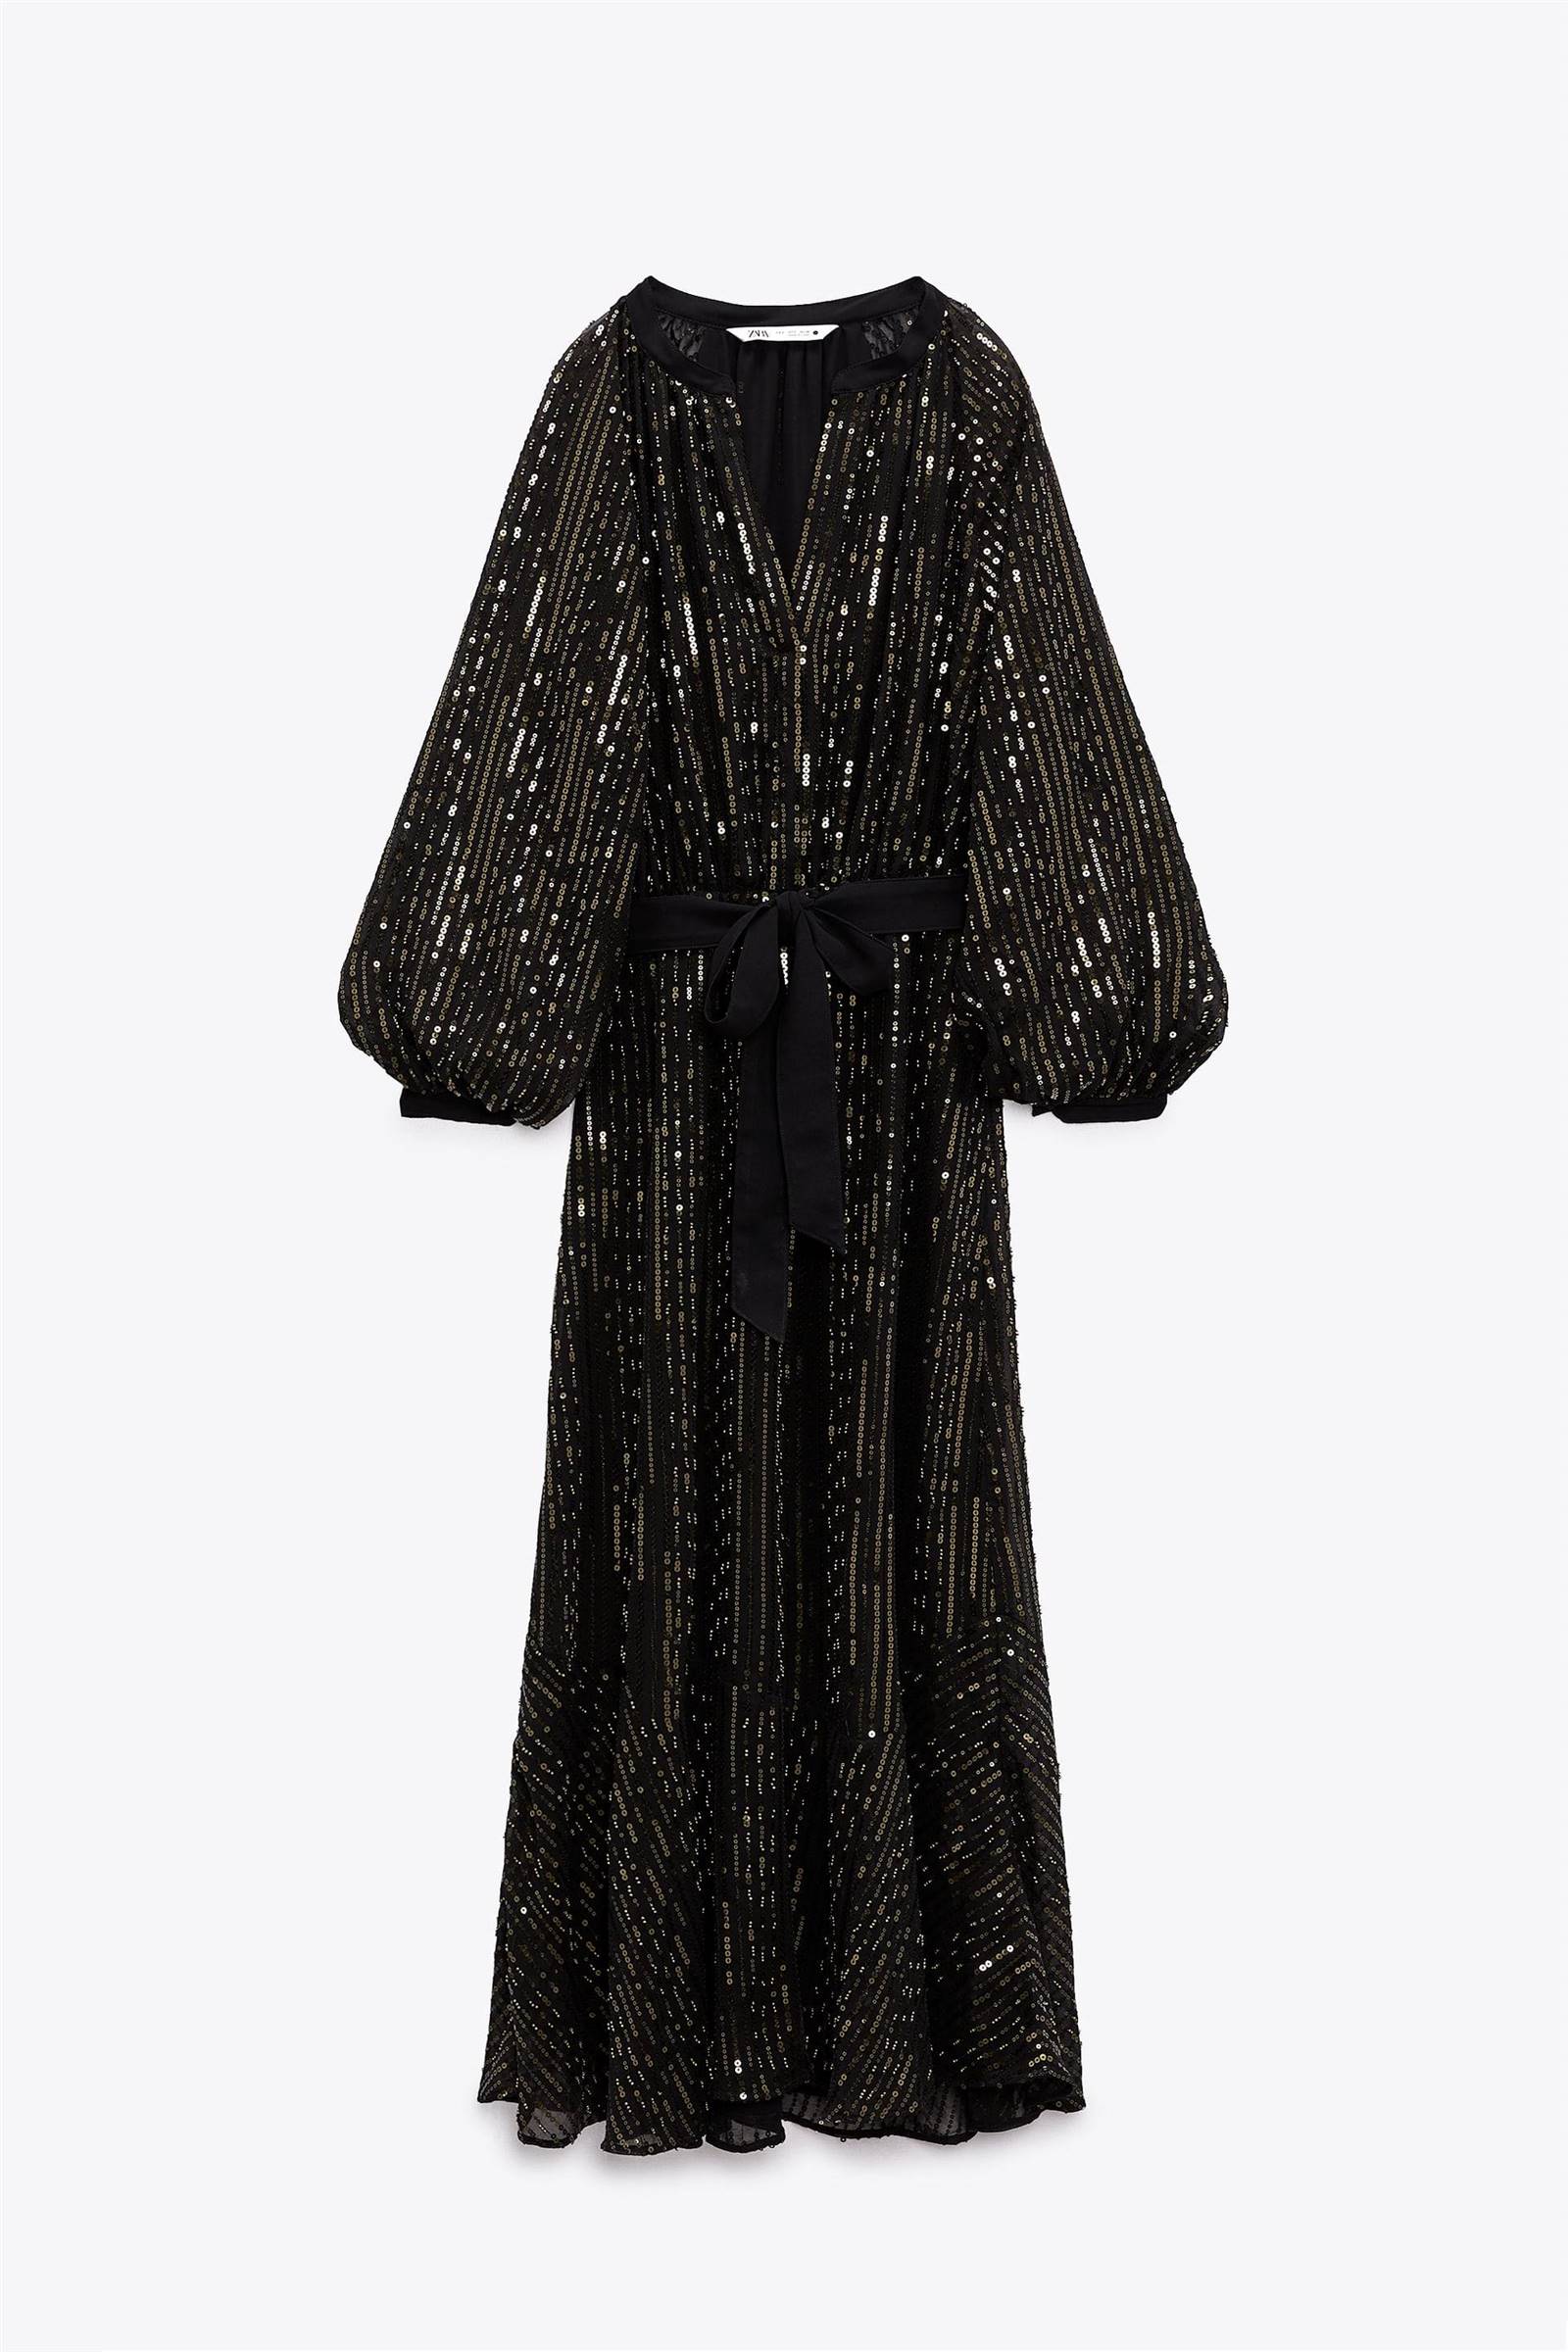 Vestido de lentejuelas de edición limitada de Zara